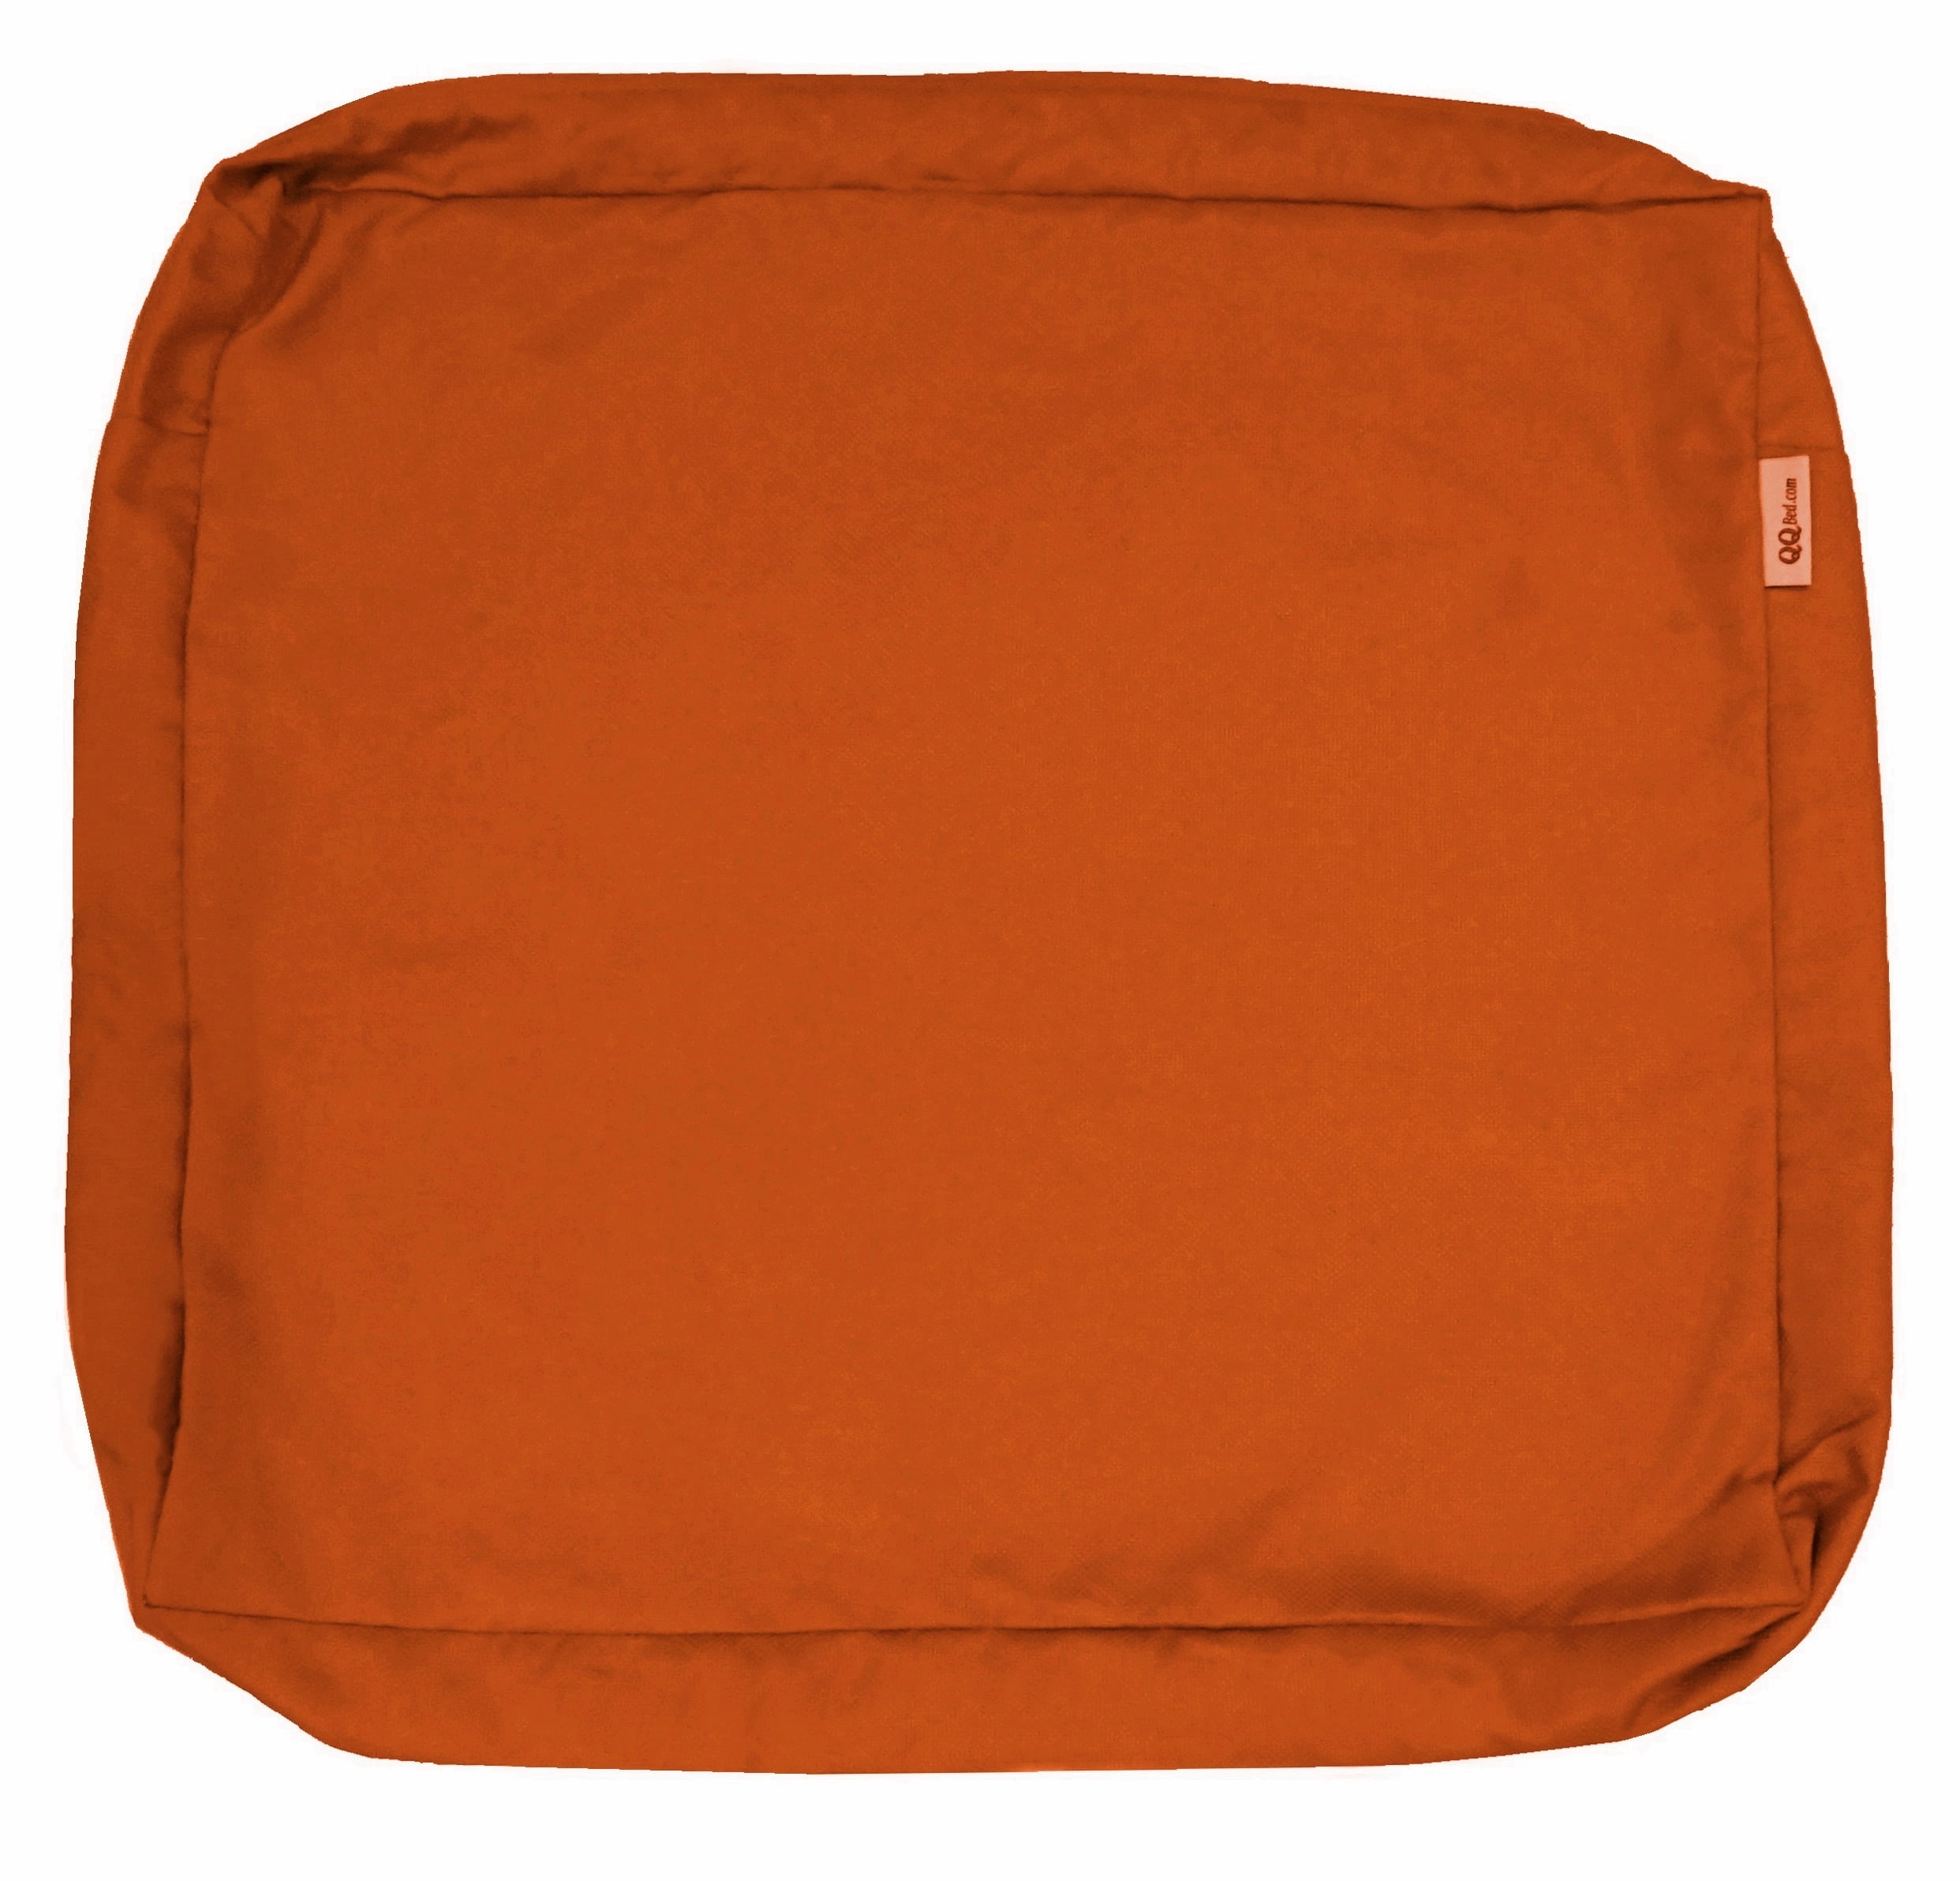 Waterproof Outdoor Seat Chair Patio Cushion Cover Duvet Case 24X22X4